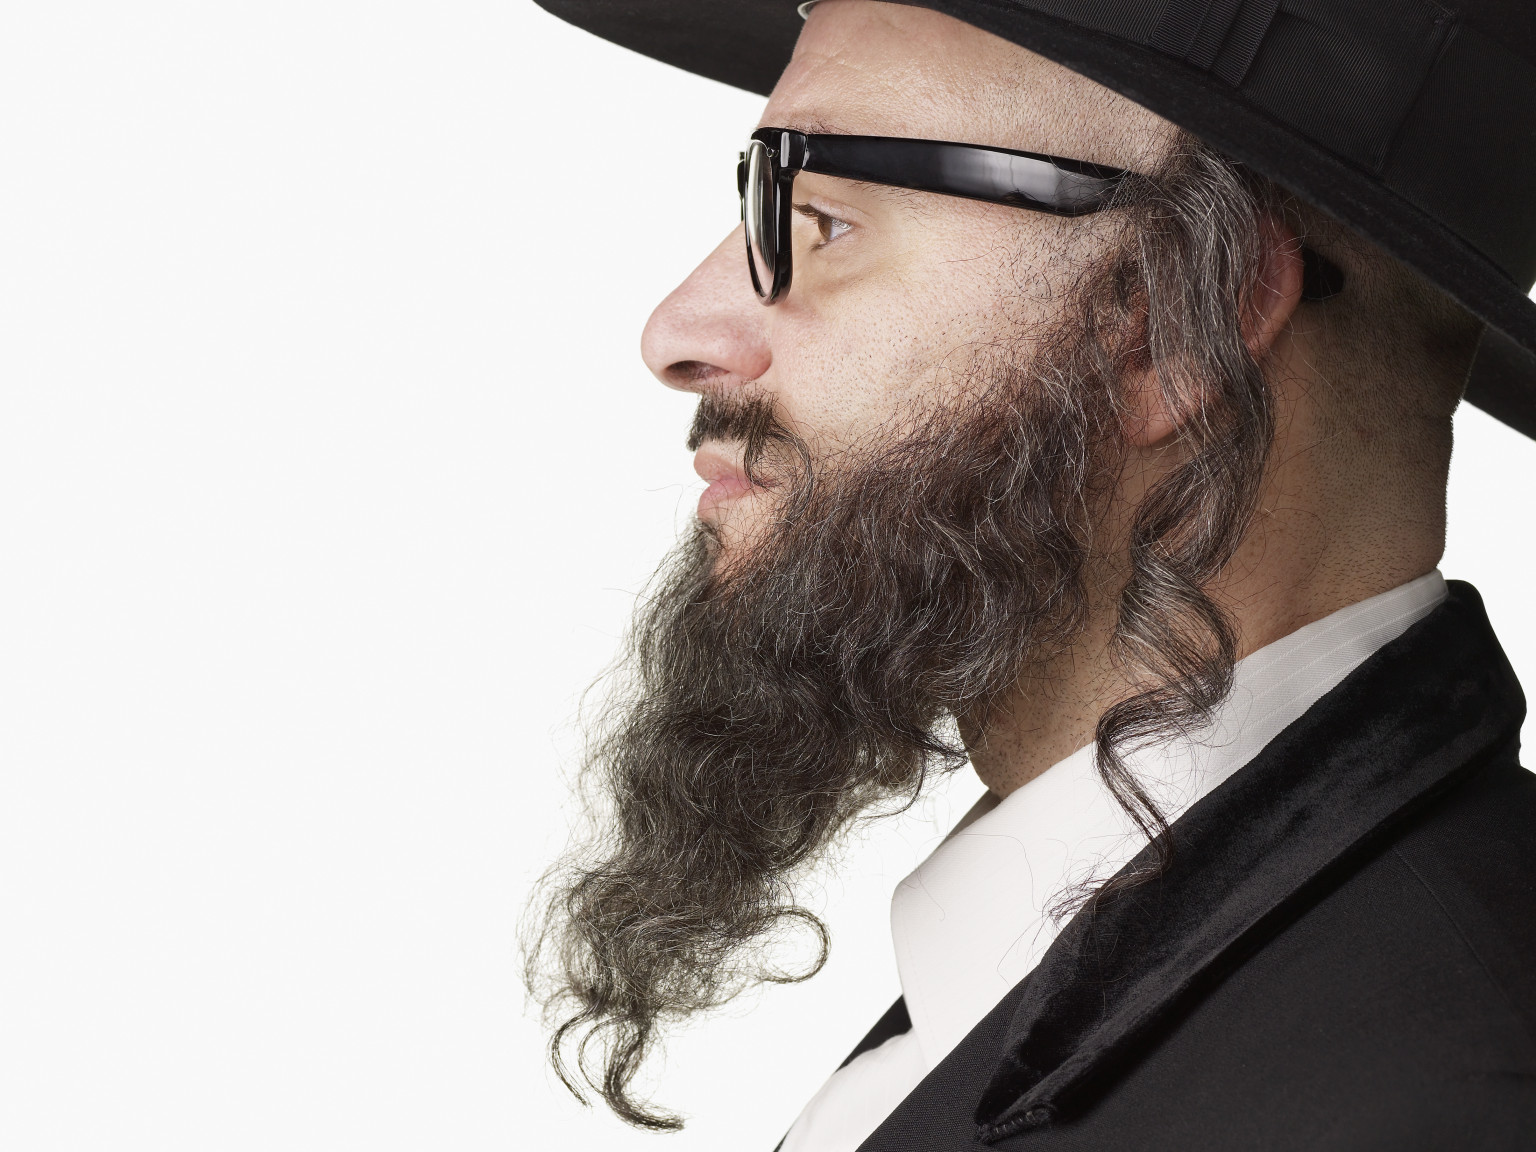 Beard-Friendly 'Bardas' Gas Masks Demanded By Israeli Orthodox Jews